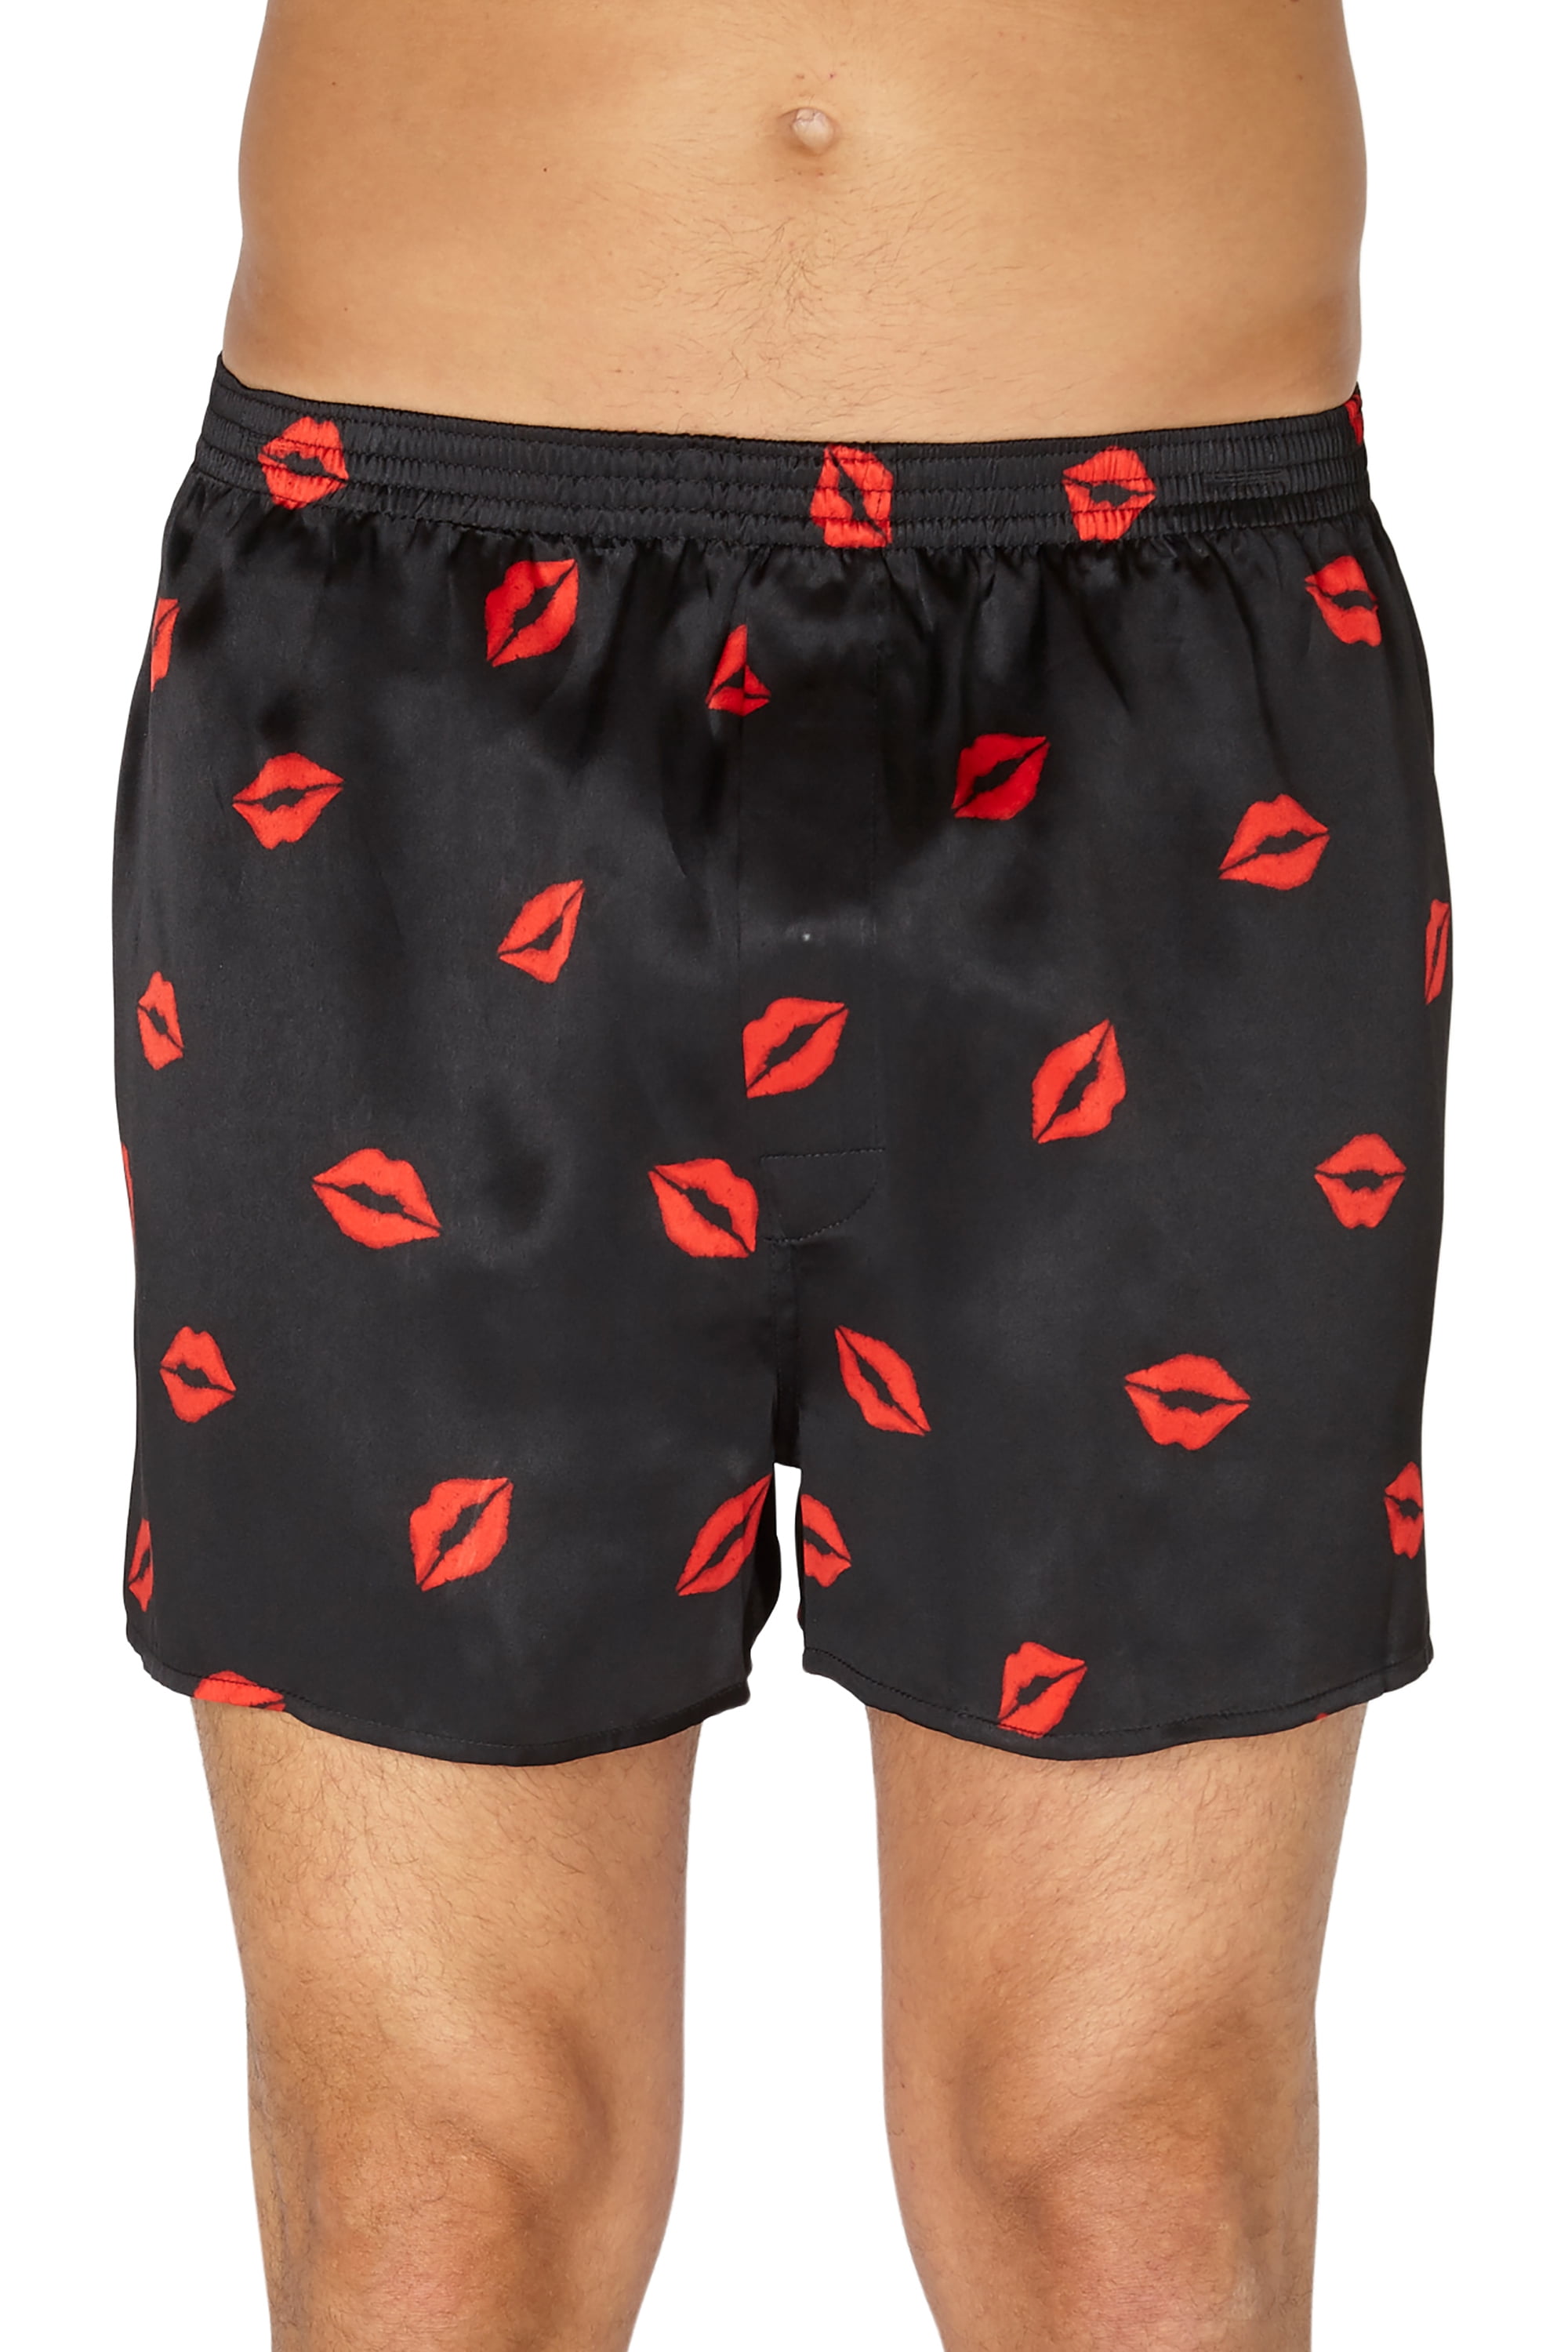 Intimo Intimo Mens Red Lips Silk Boxers Shorts Underwear Walmart